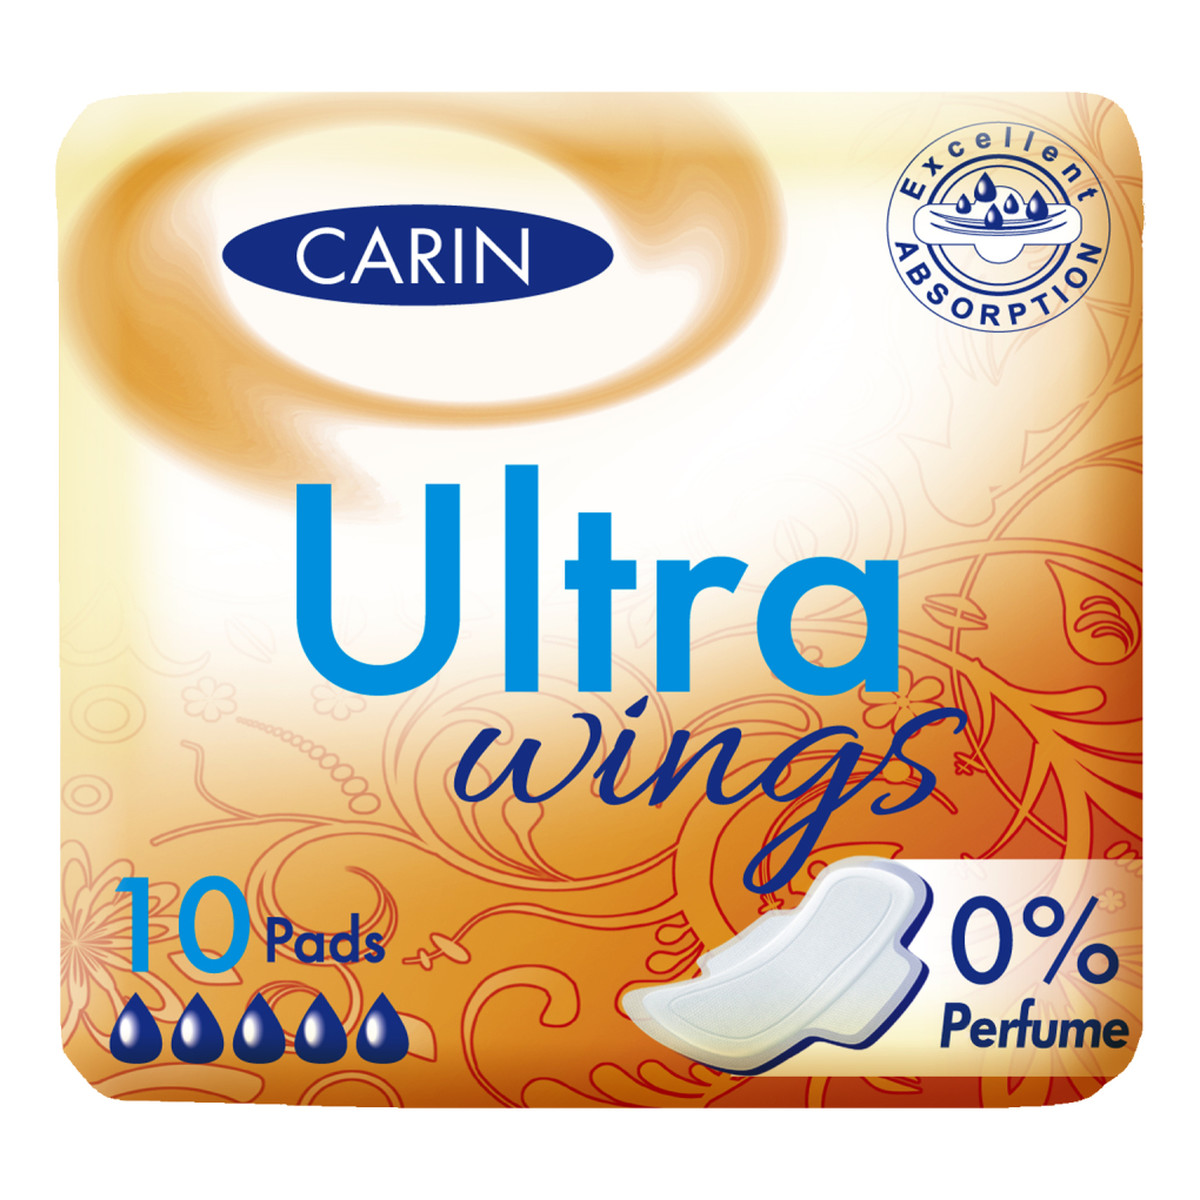 Carin Ultra wings podpaski higieniczne 10szt